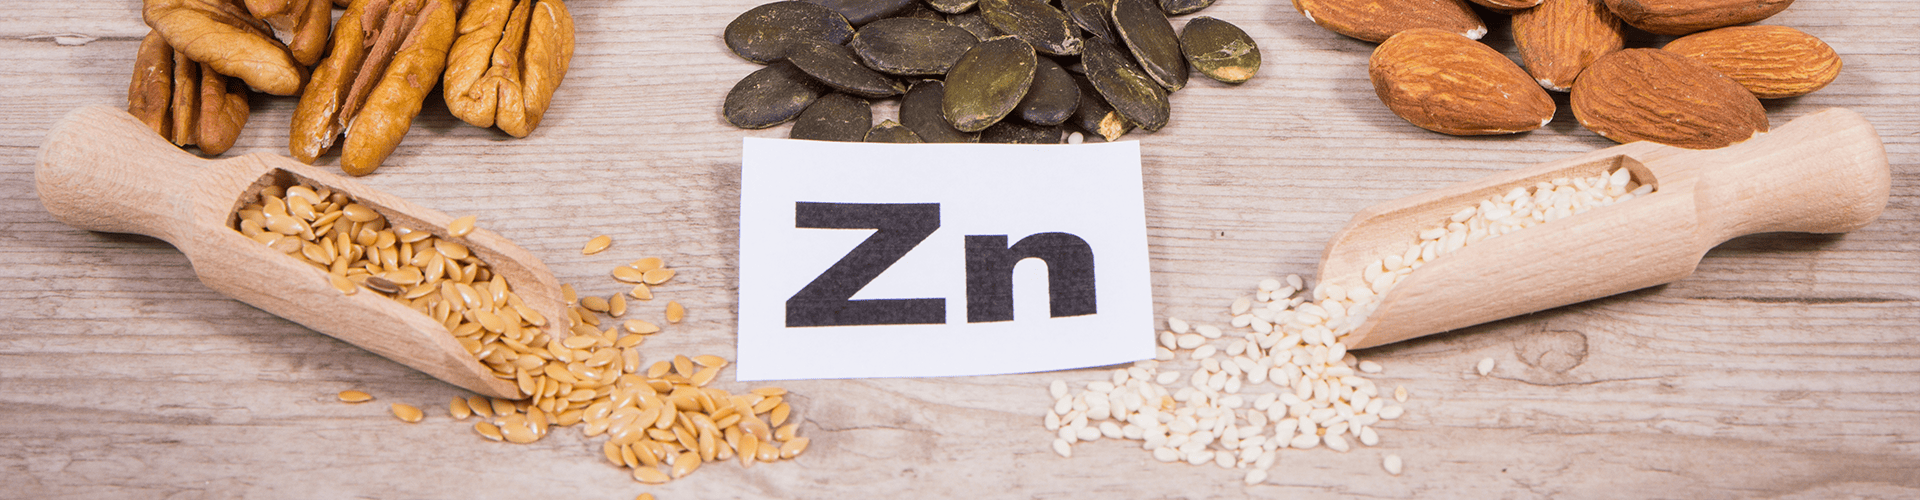 Zinc: The Powerful Nutrient for Optimum Health